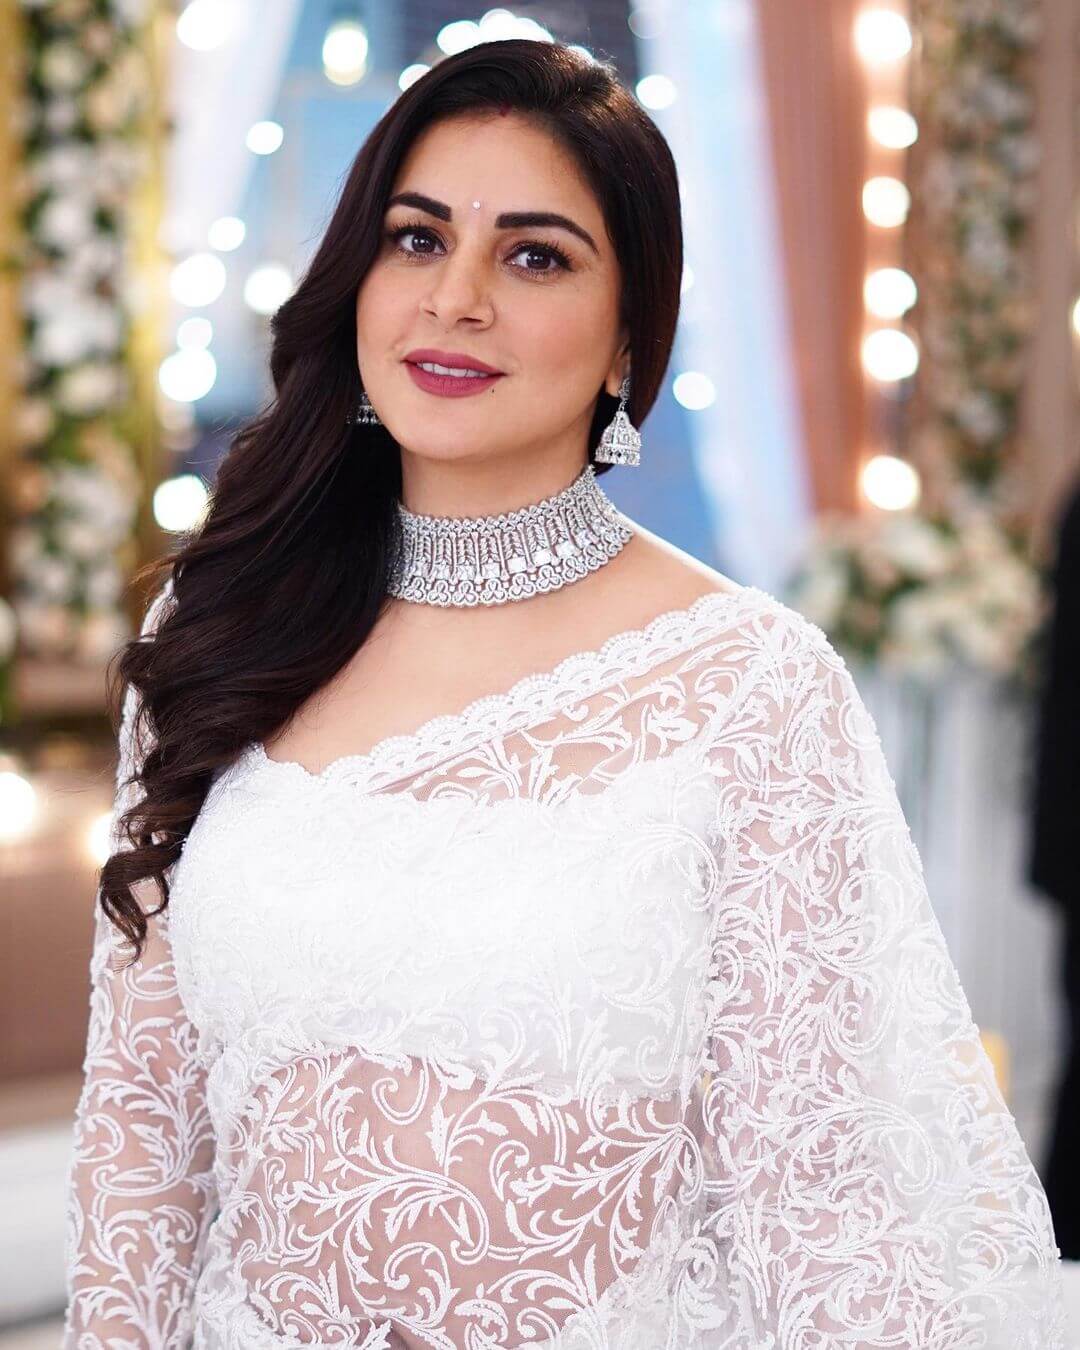 TV Actress Shraddha Arya Vintage Look In White Saree With Diamond Choker